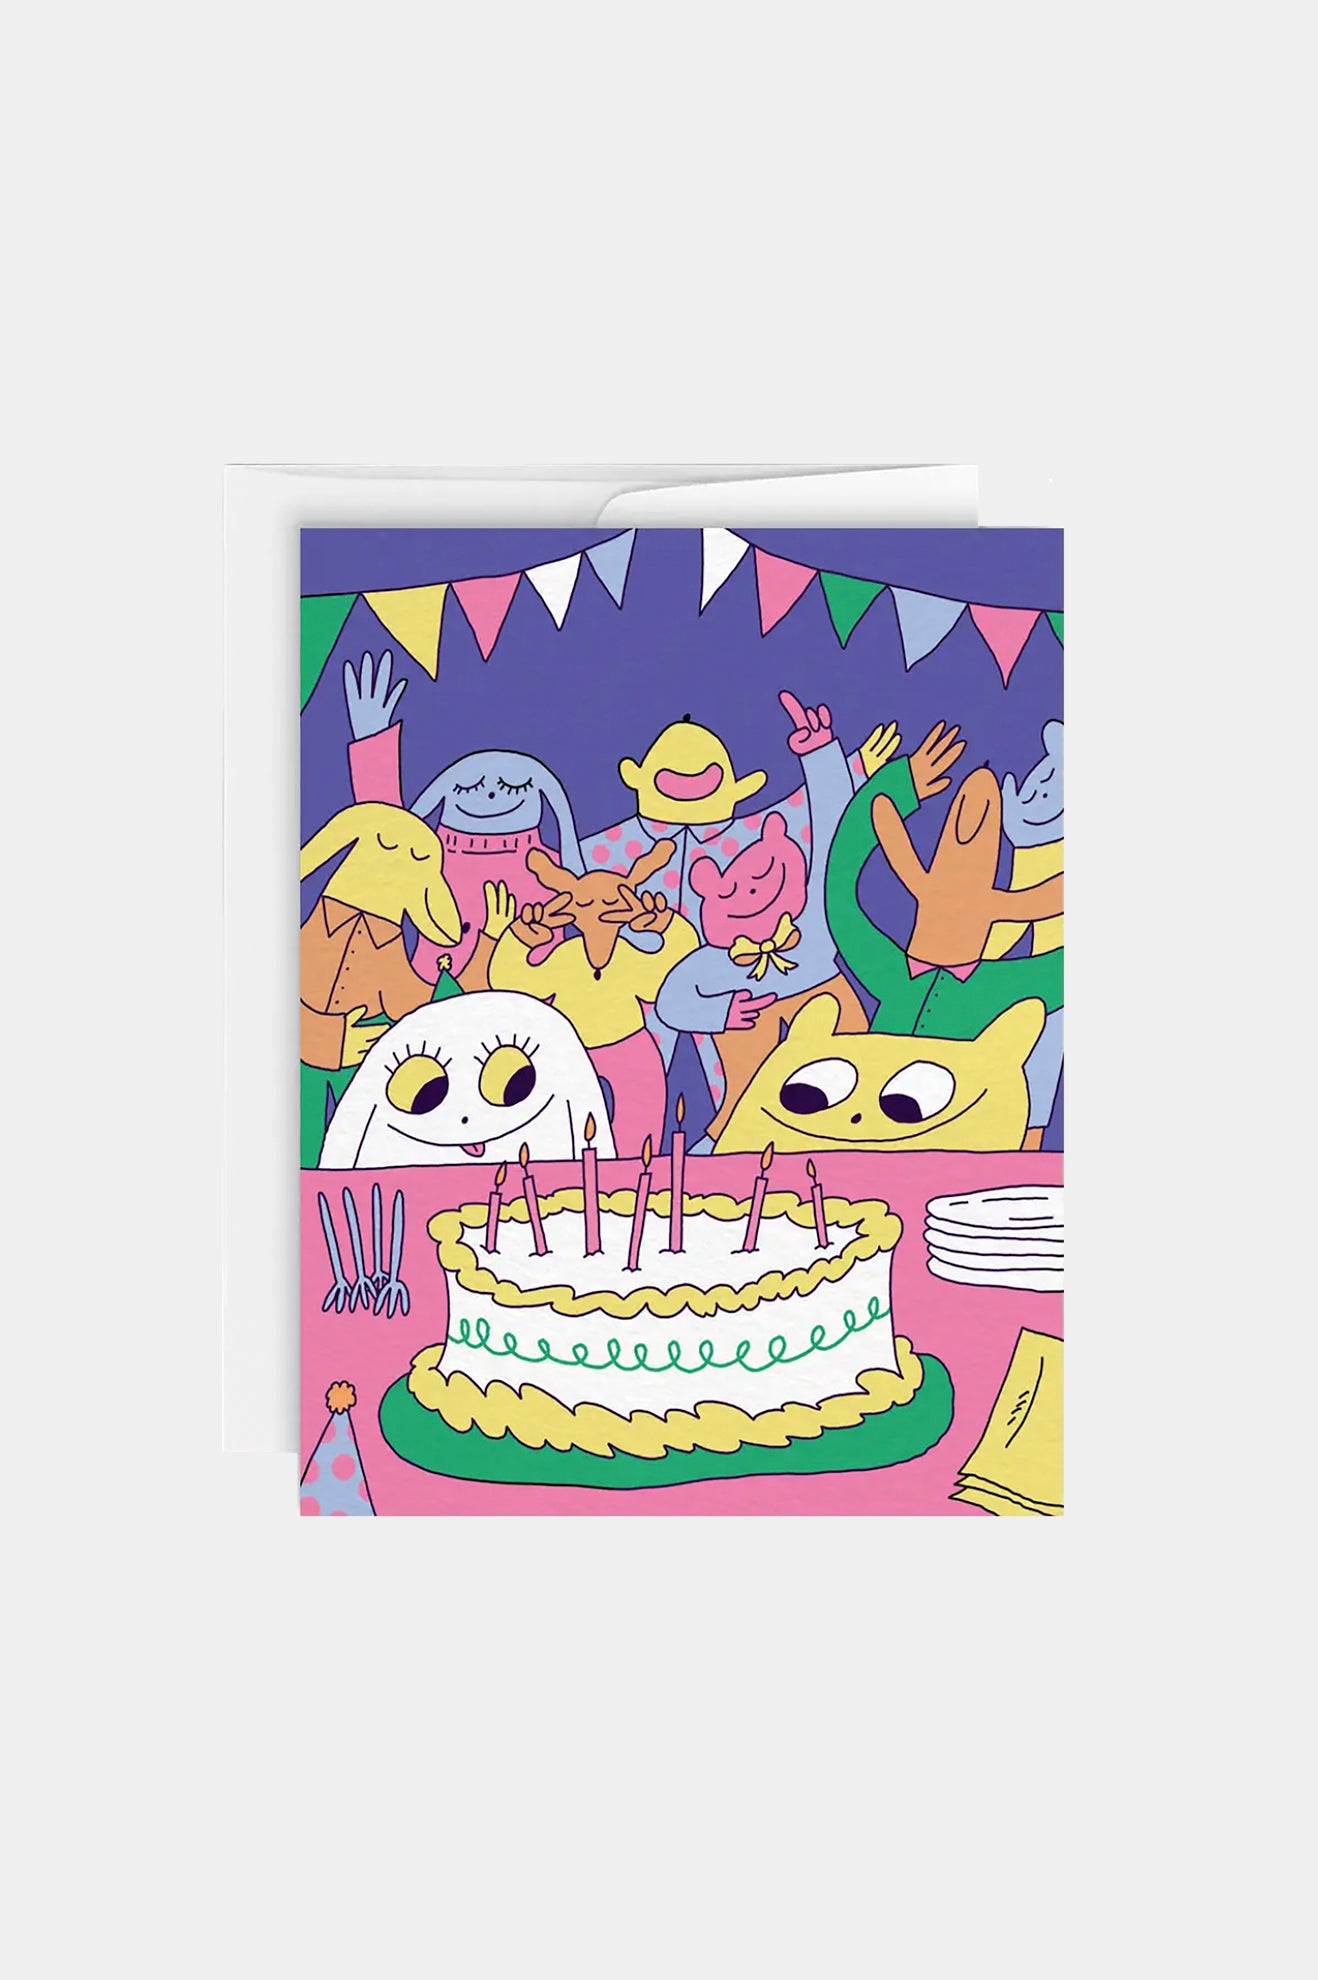 Celebration Birthday Card